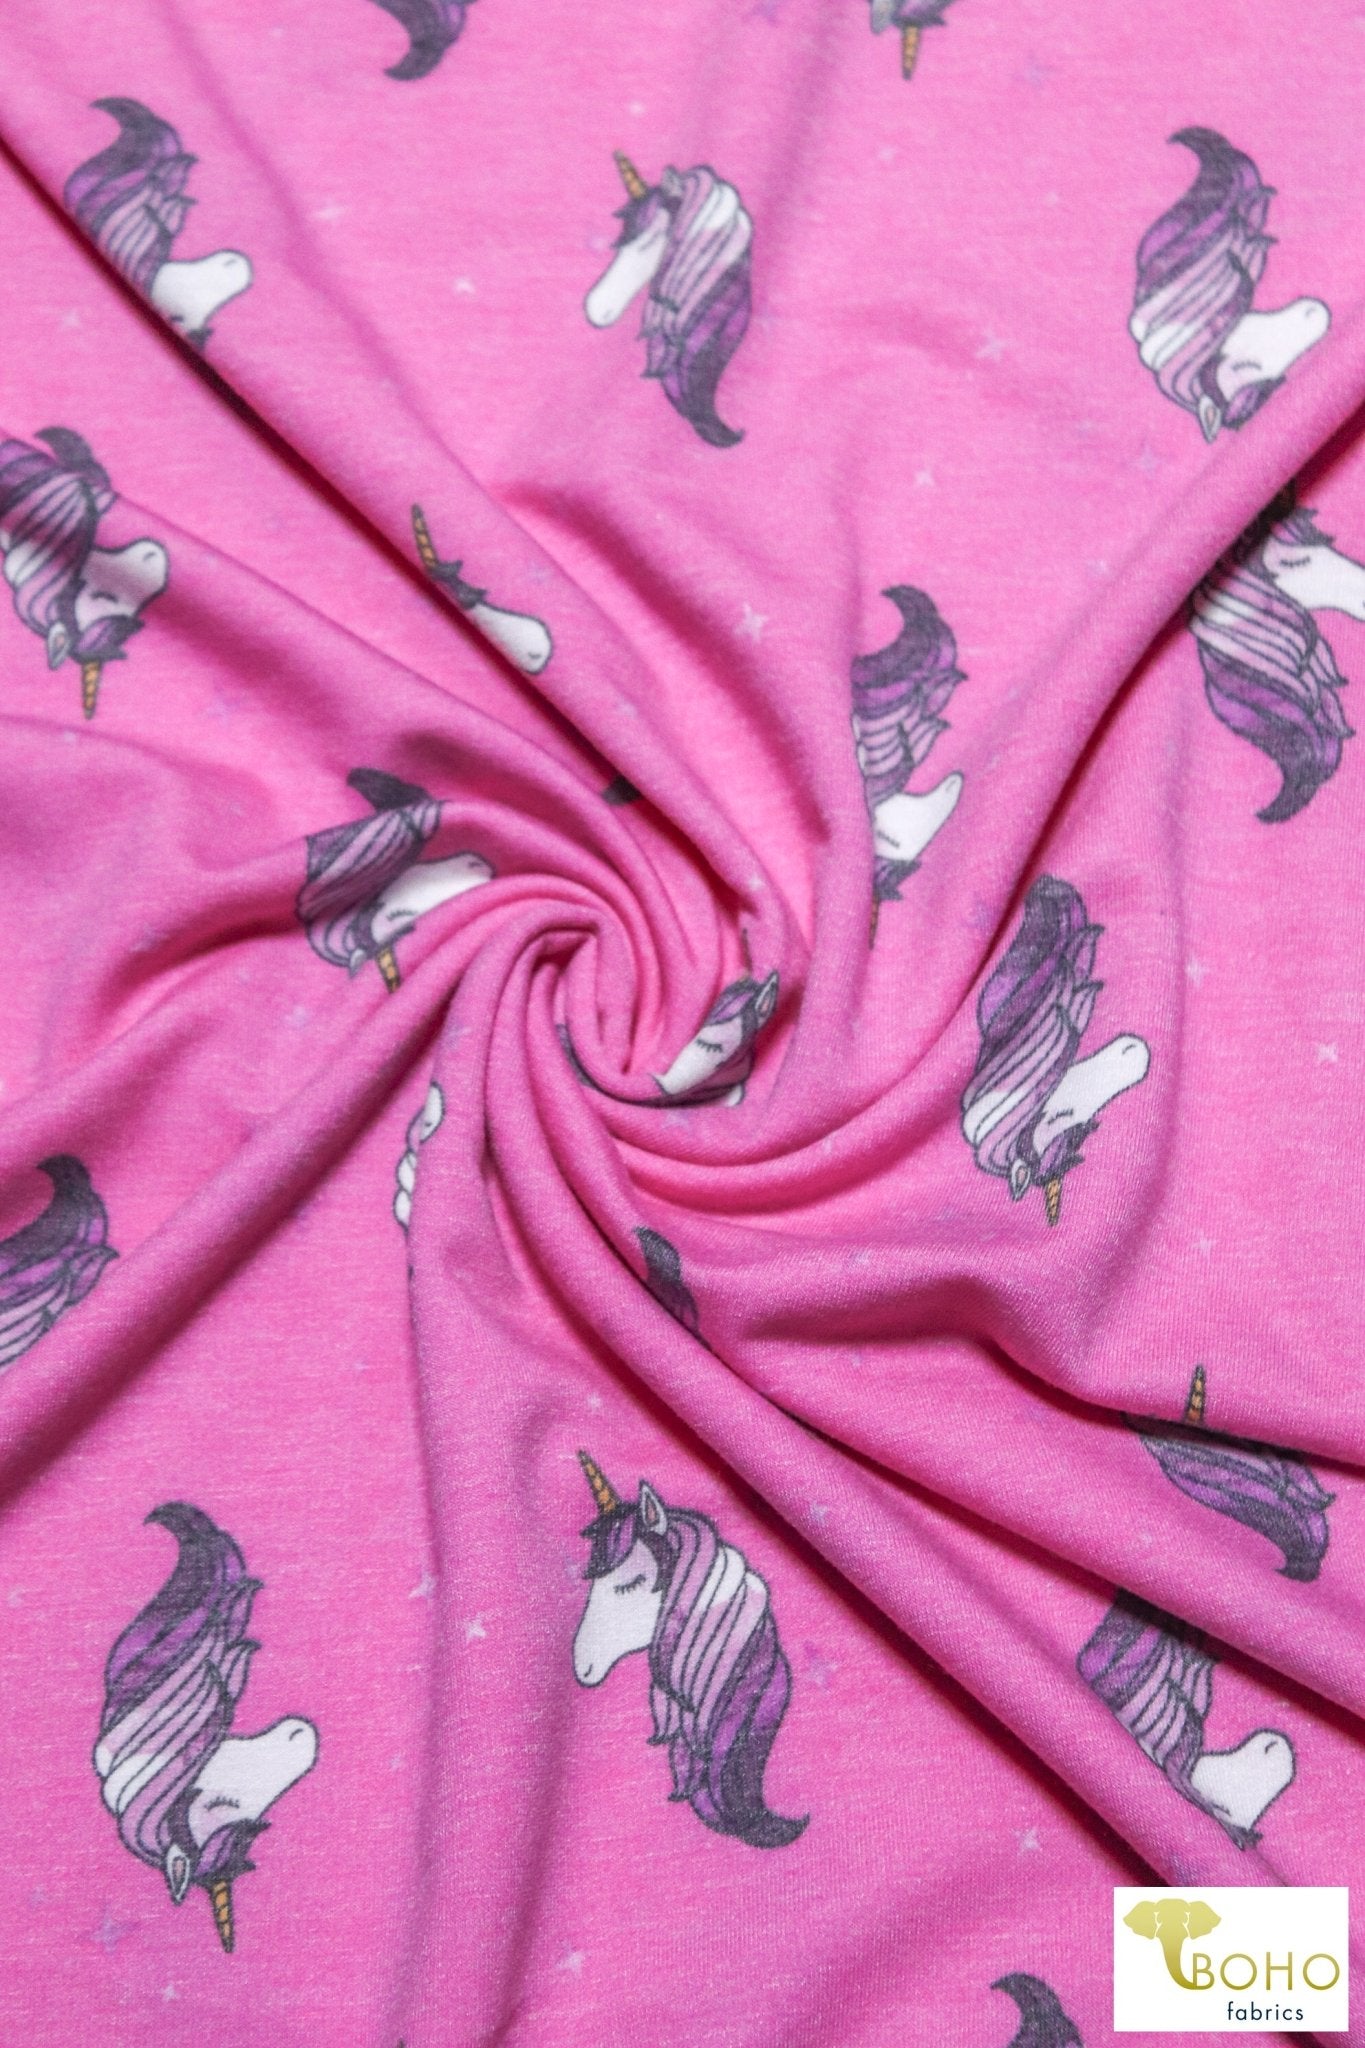 Purple Unicorns on Pink, French Terry Knit Print FTP-325-PNK - Boho Fabrics